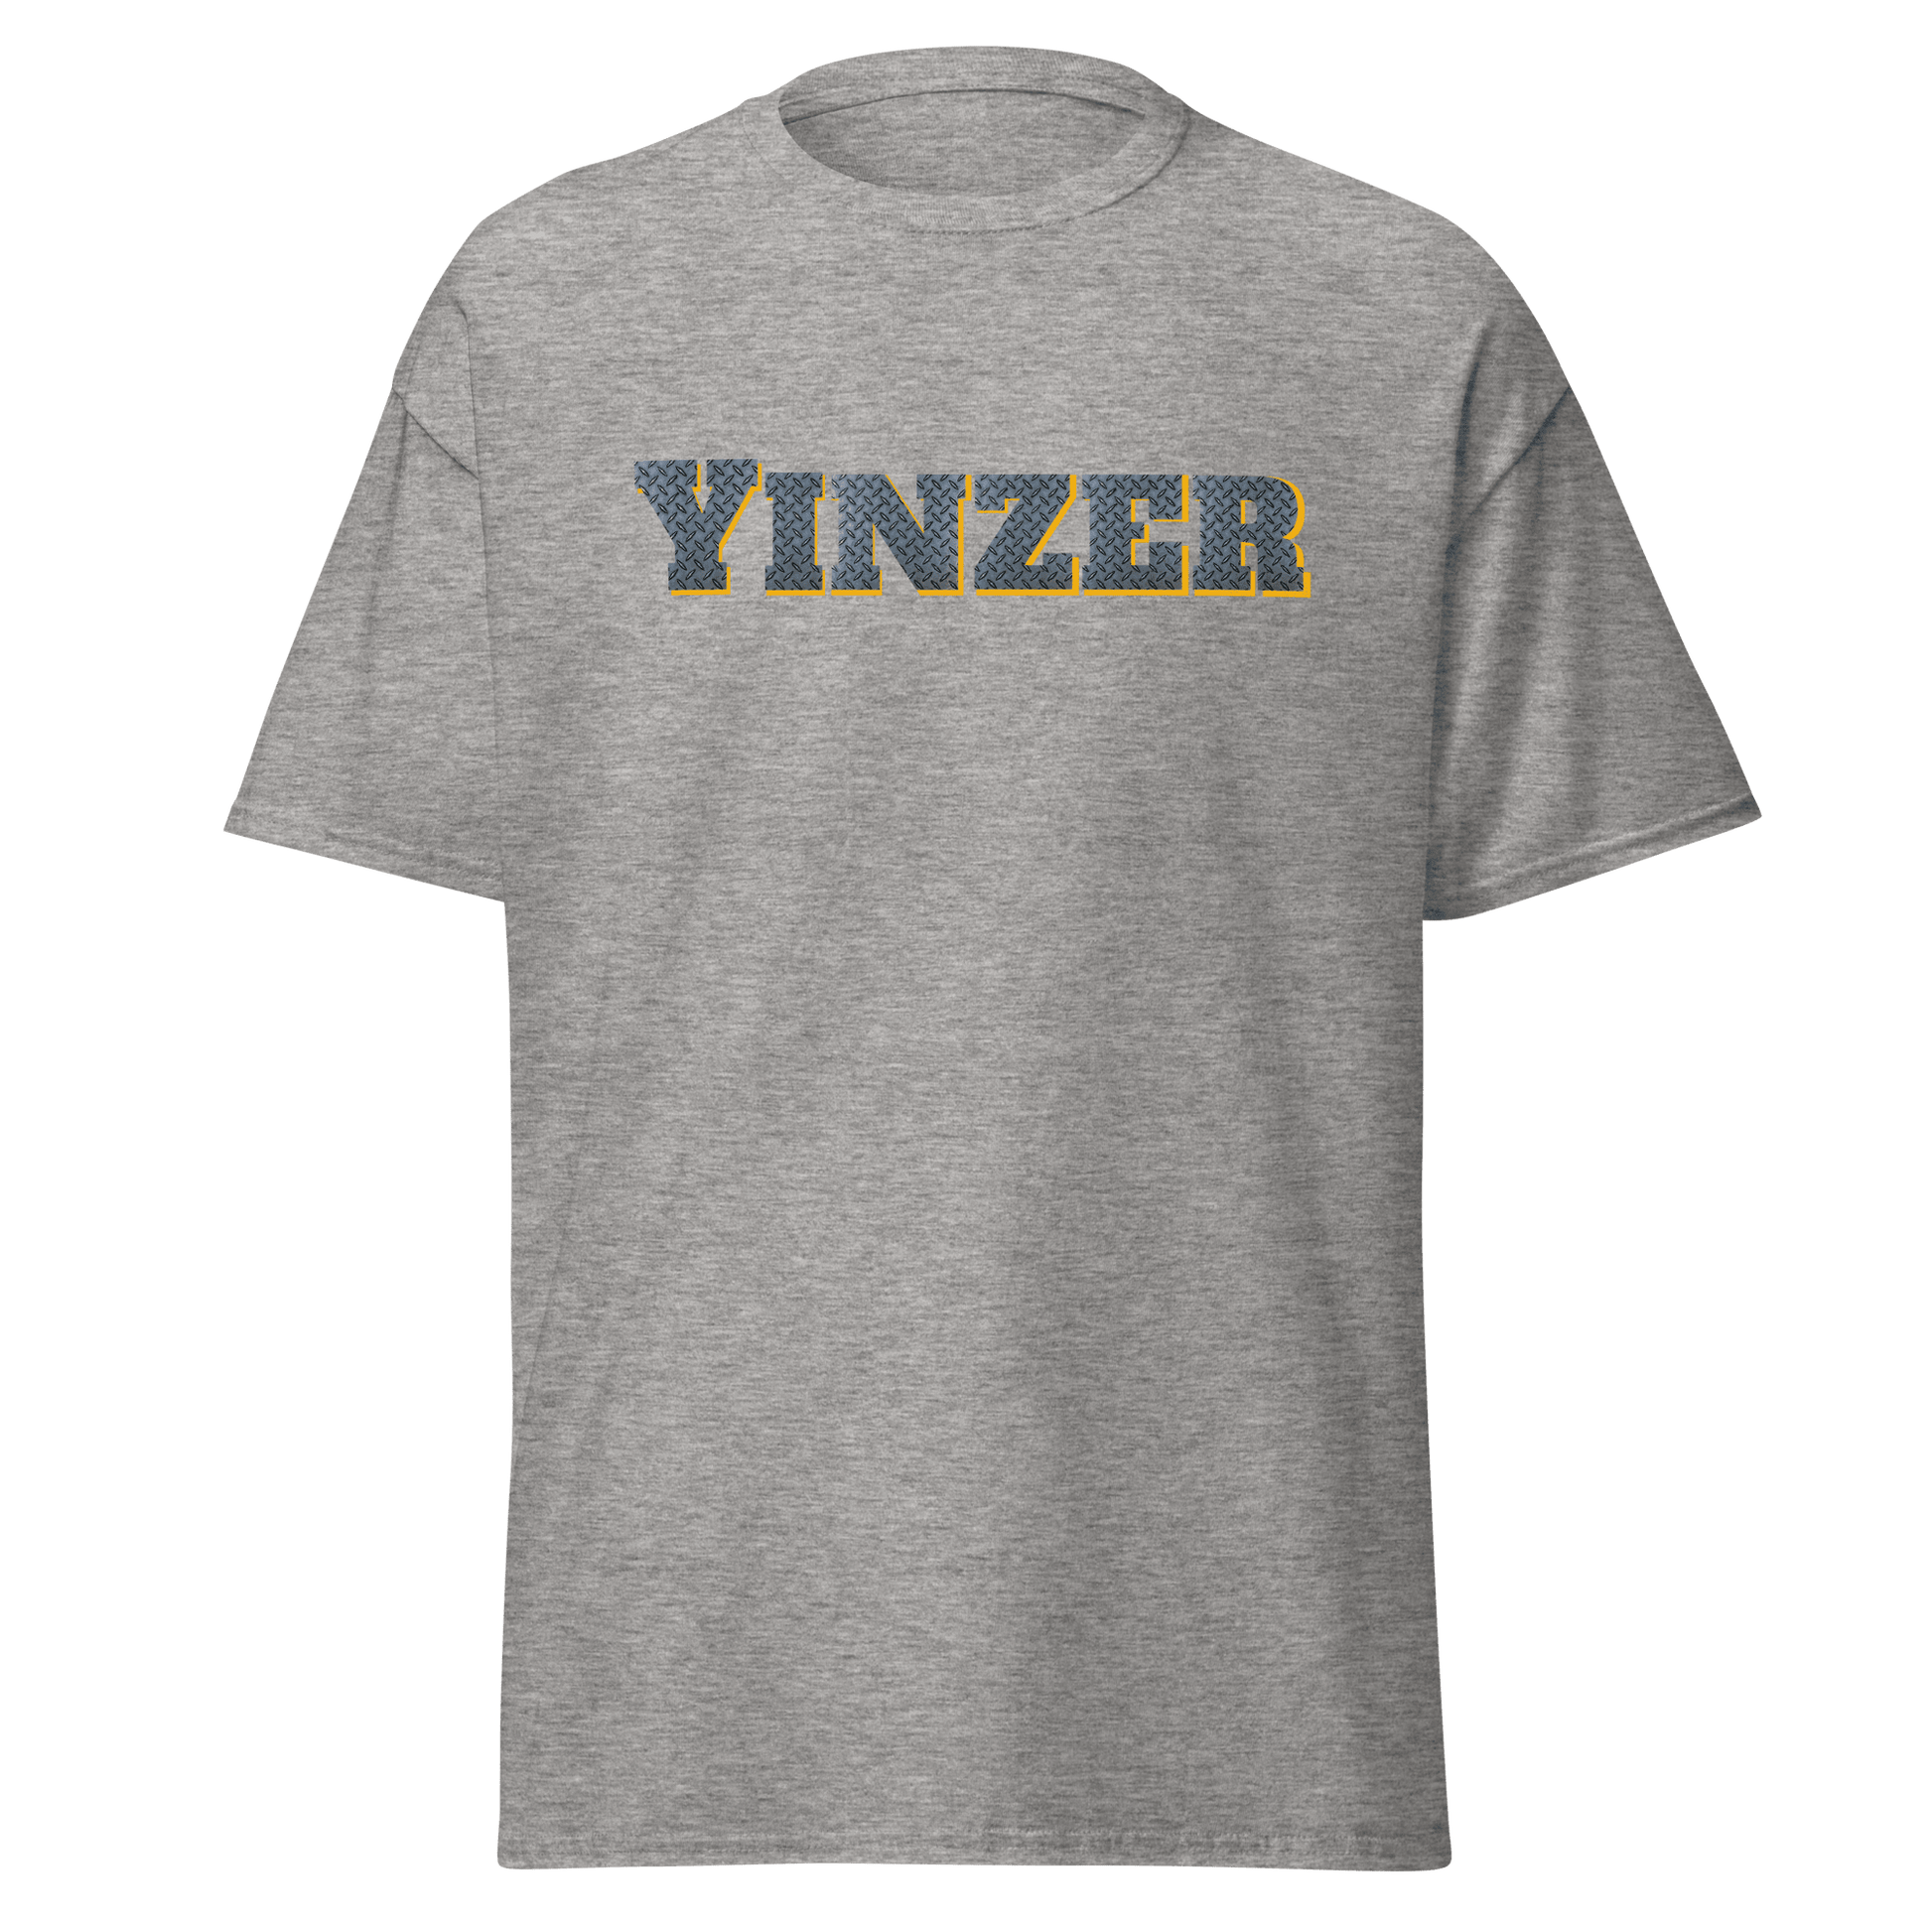 Steel Yinzer T-Shirt - Burgh Proud Yinzergear Sport Grey S 